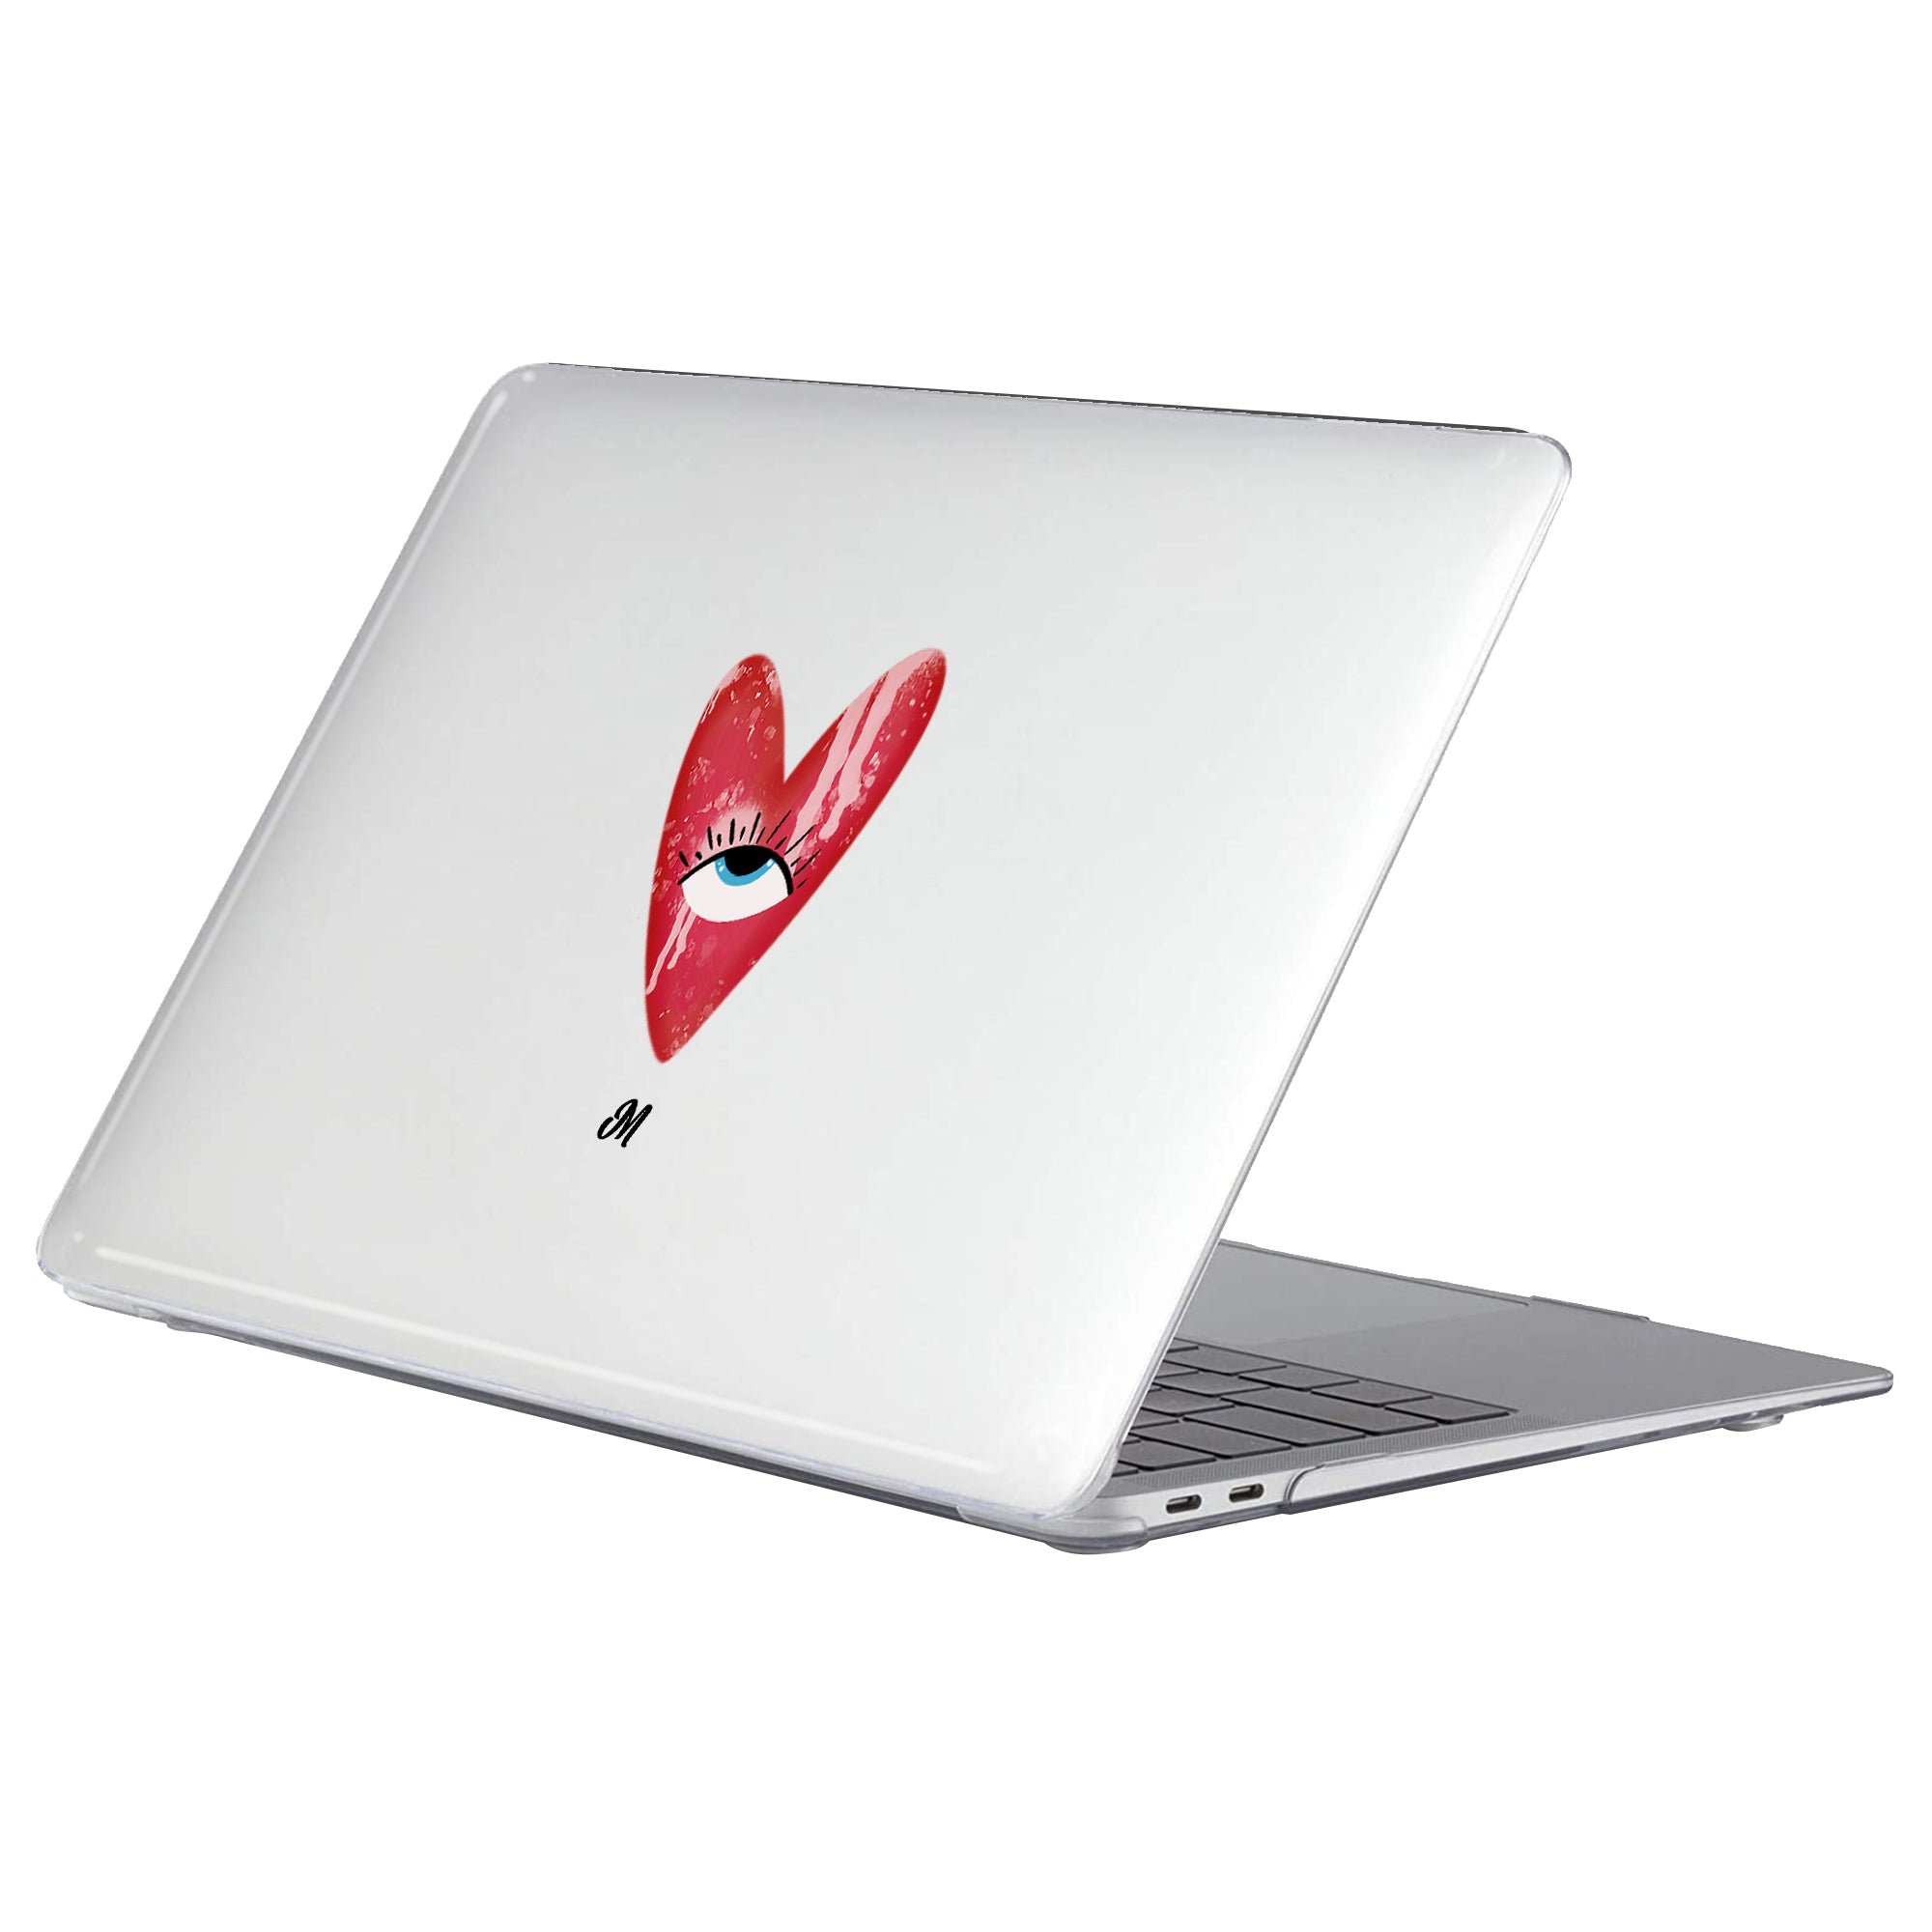 Sad Heart MacBook Case - Mandala Cases